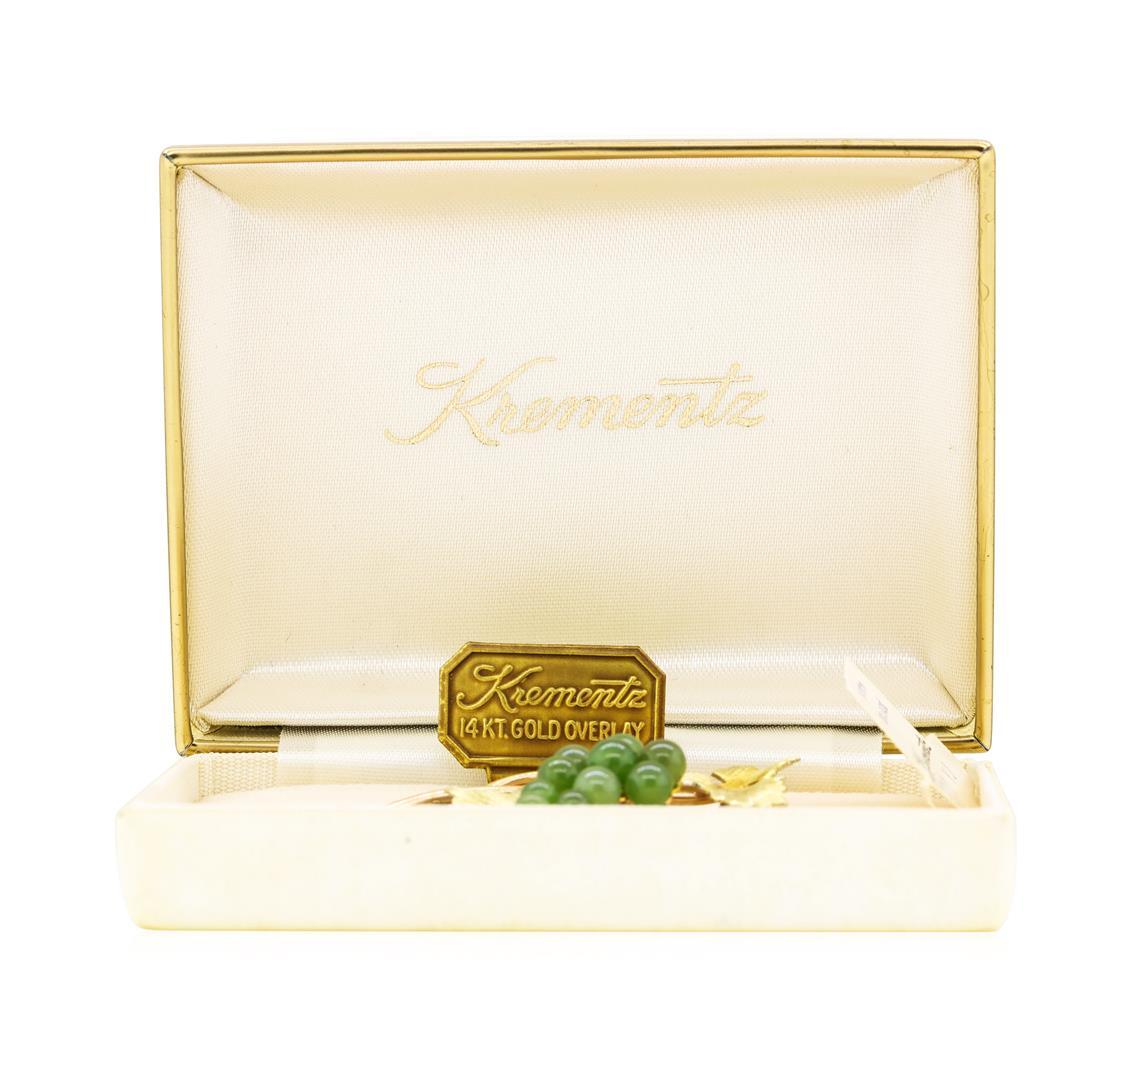 Vintage Krementz Genuine Jade Brooch with 14KT Gold Overlay with Original Box